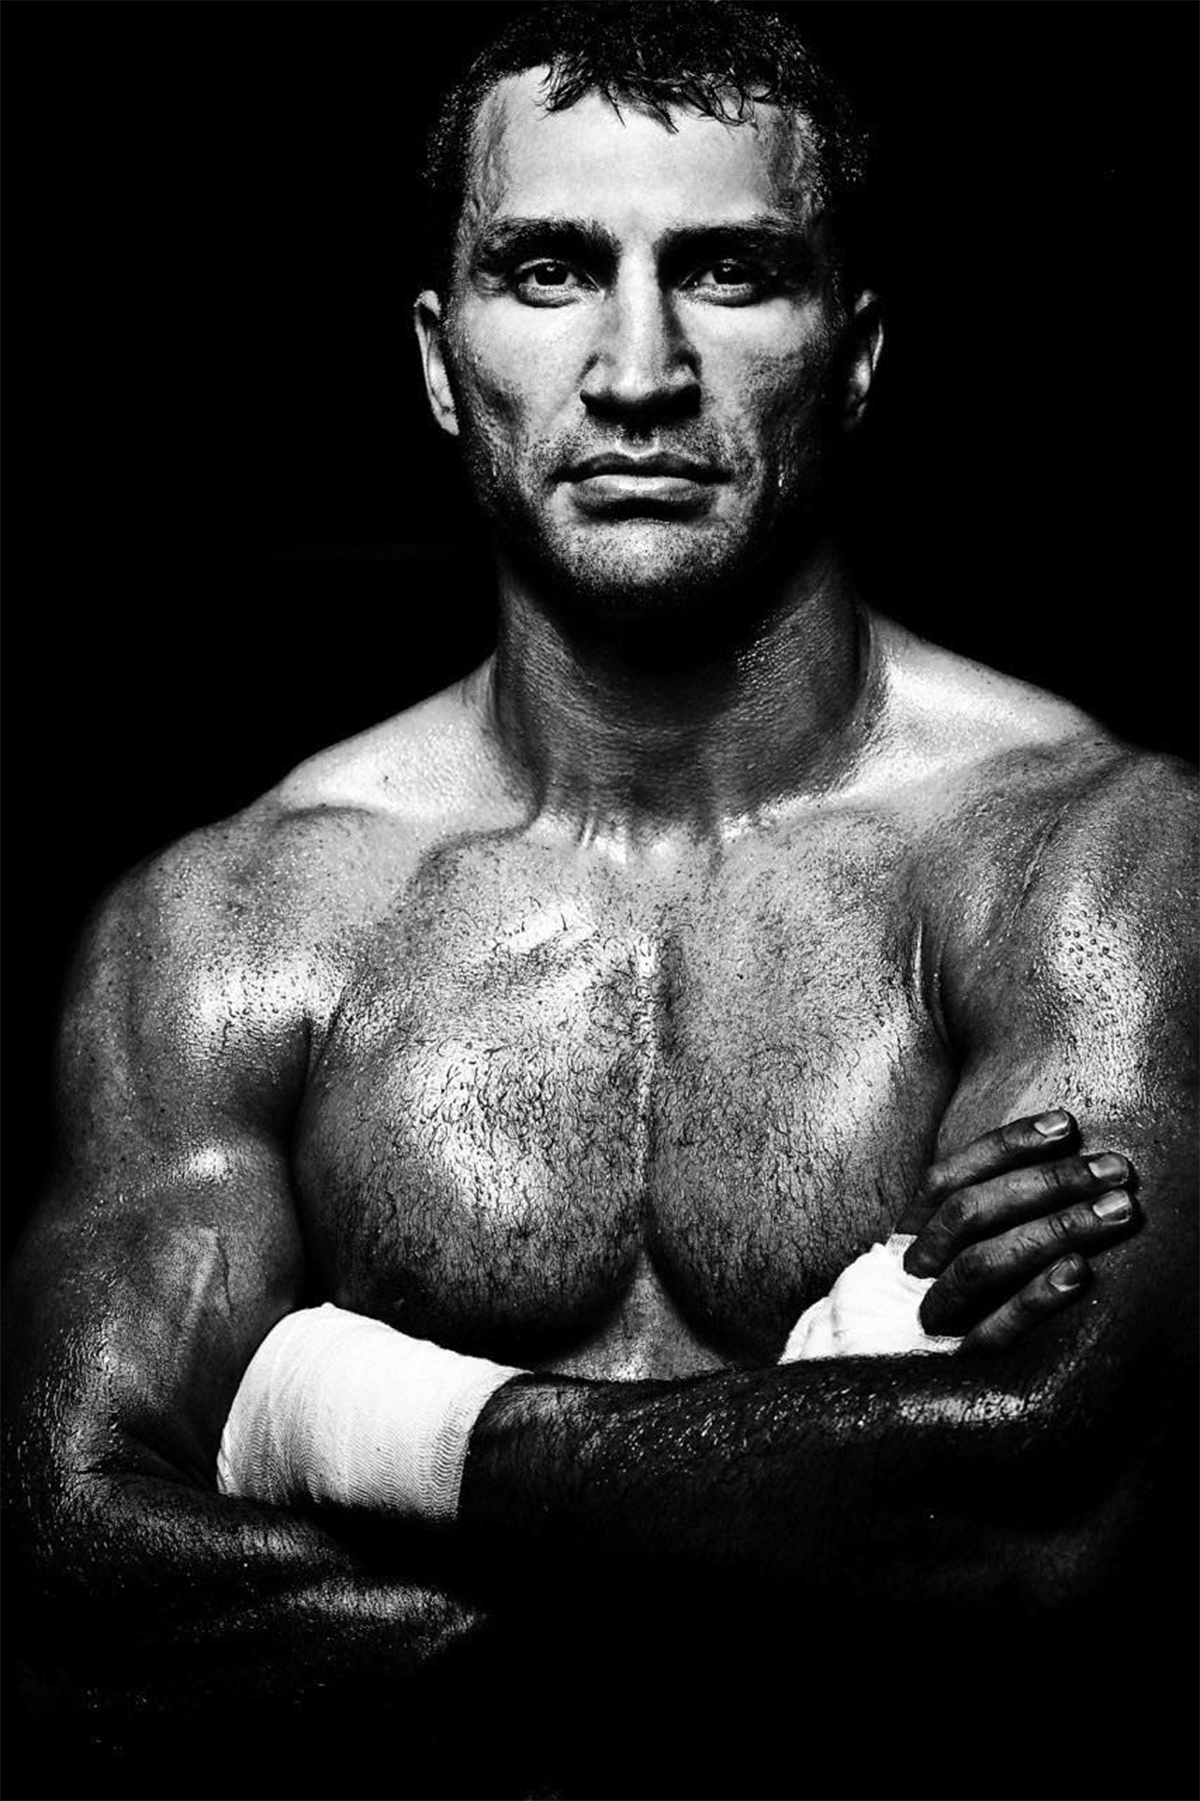 Its WILL to exist is infinite. Glory to Ukrain, champion boxer Wladimir Klitschko tweeted.